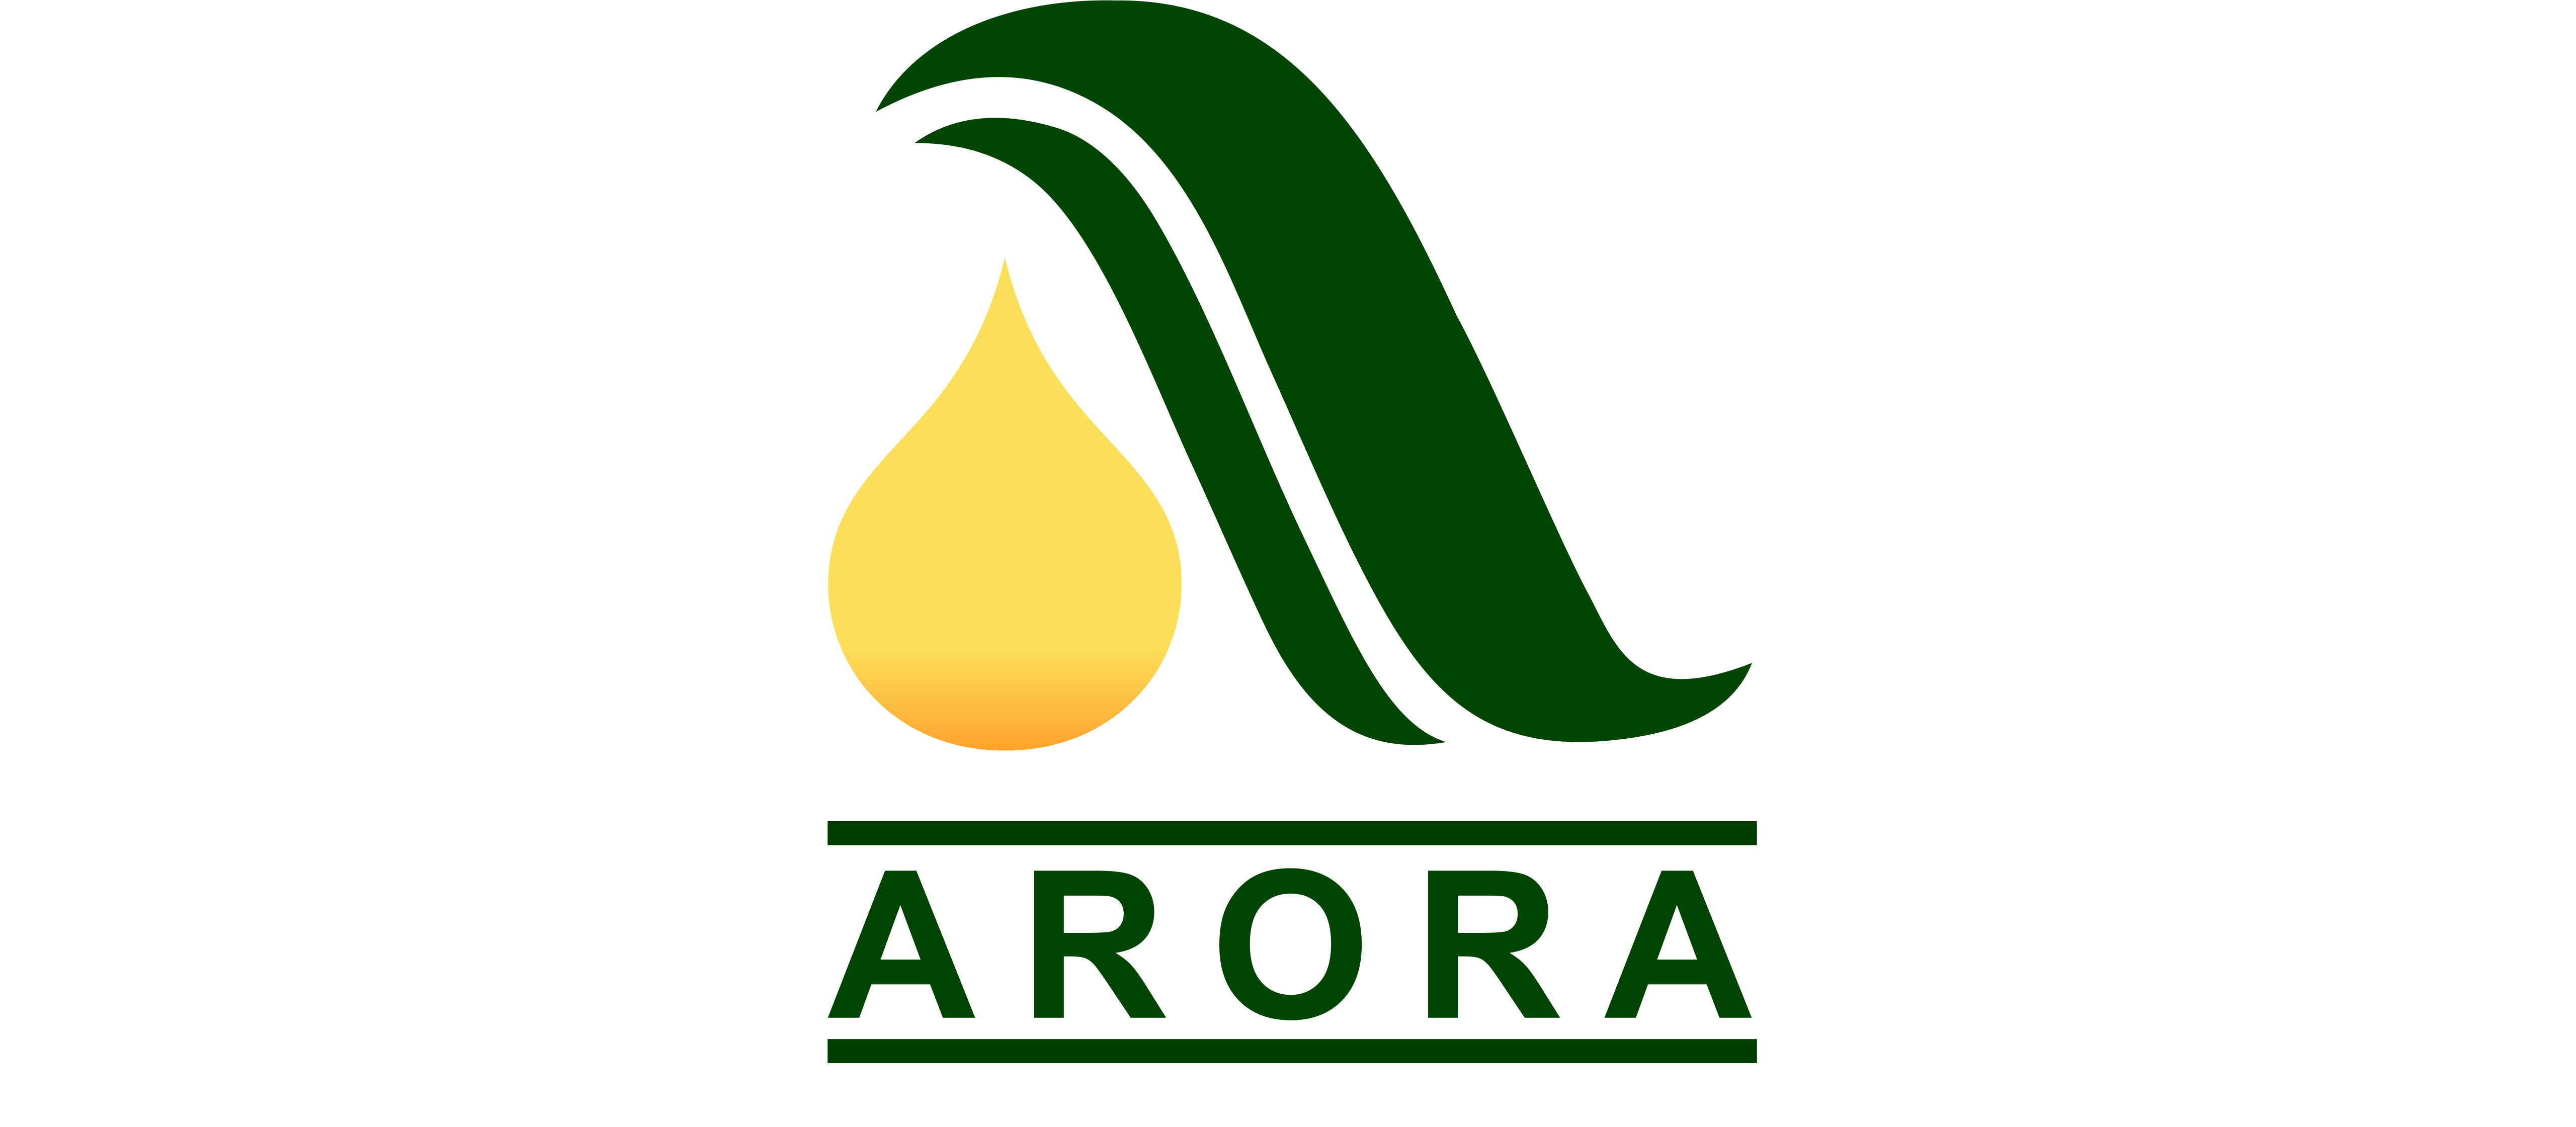 Arora Aromatics Pvt Ltd Brochure